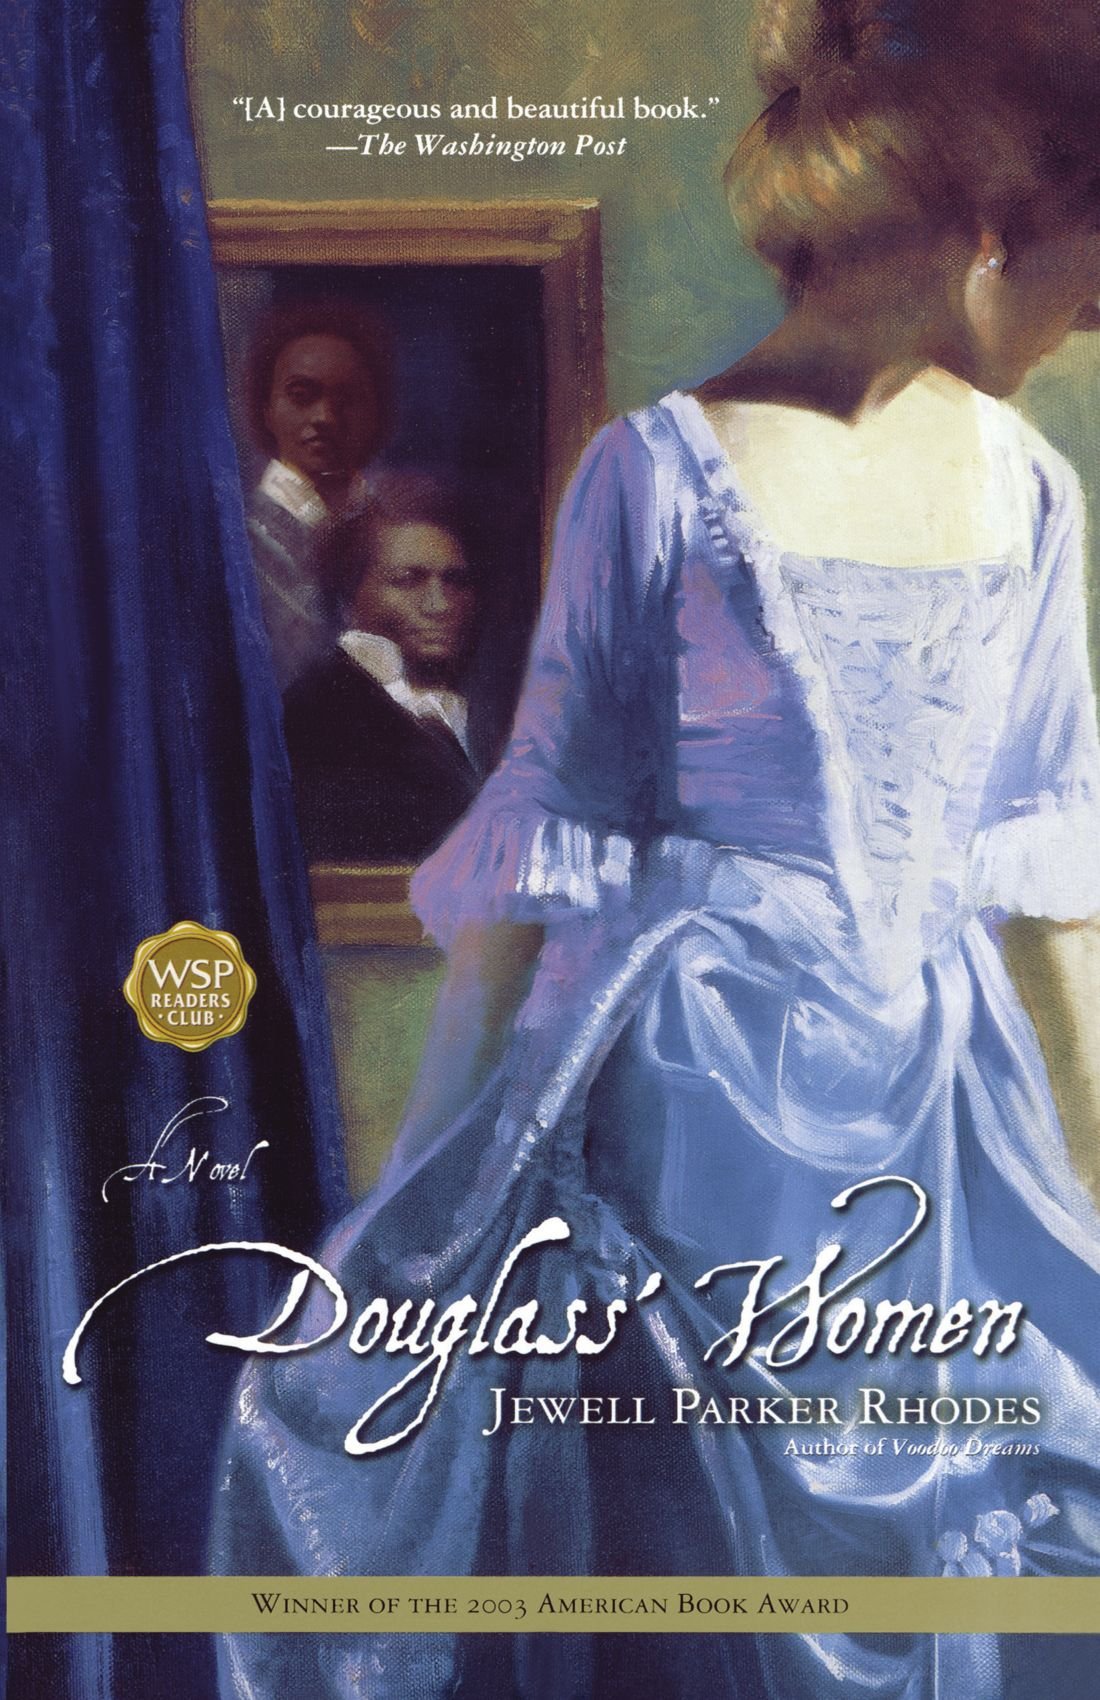 Douglass' women